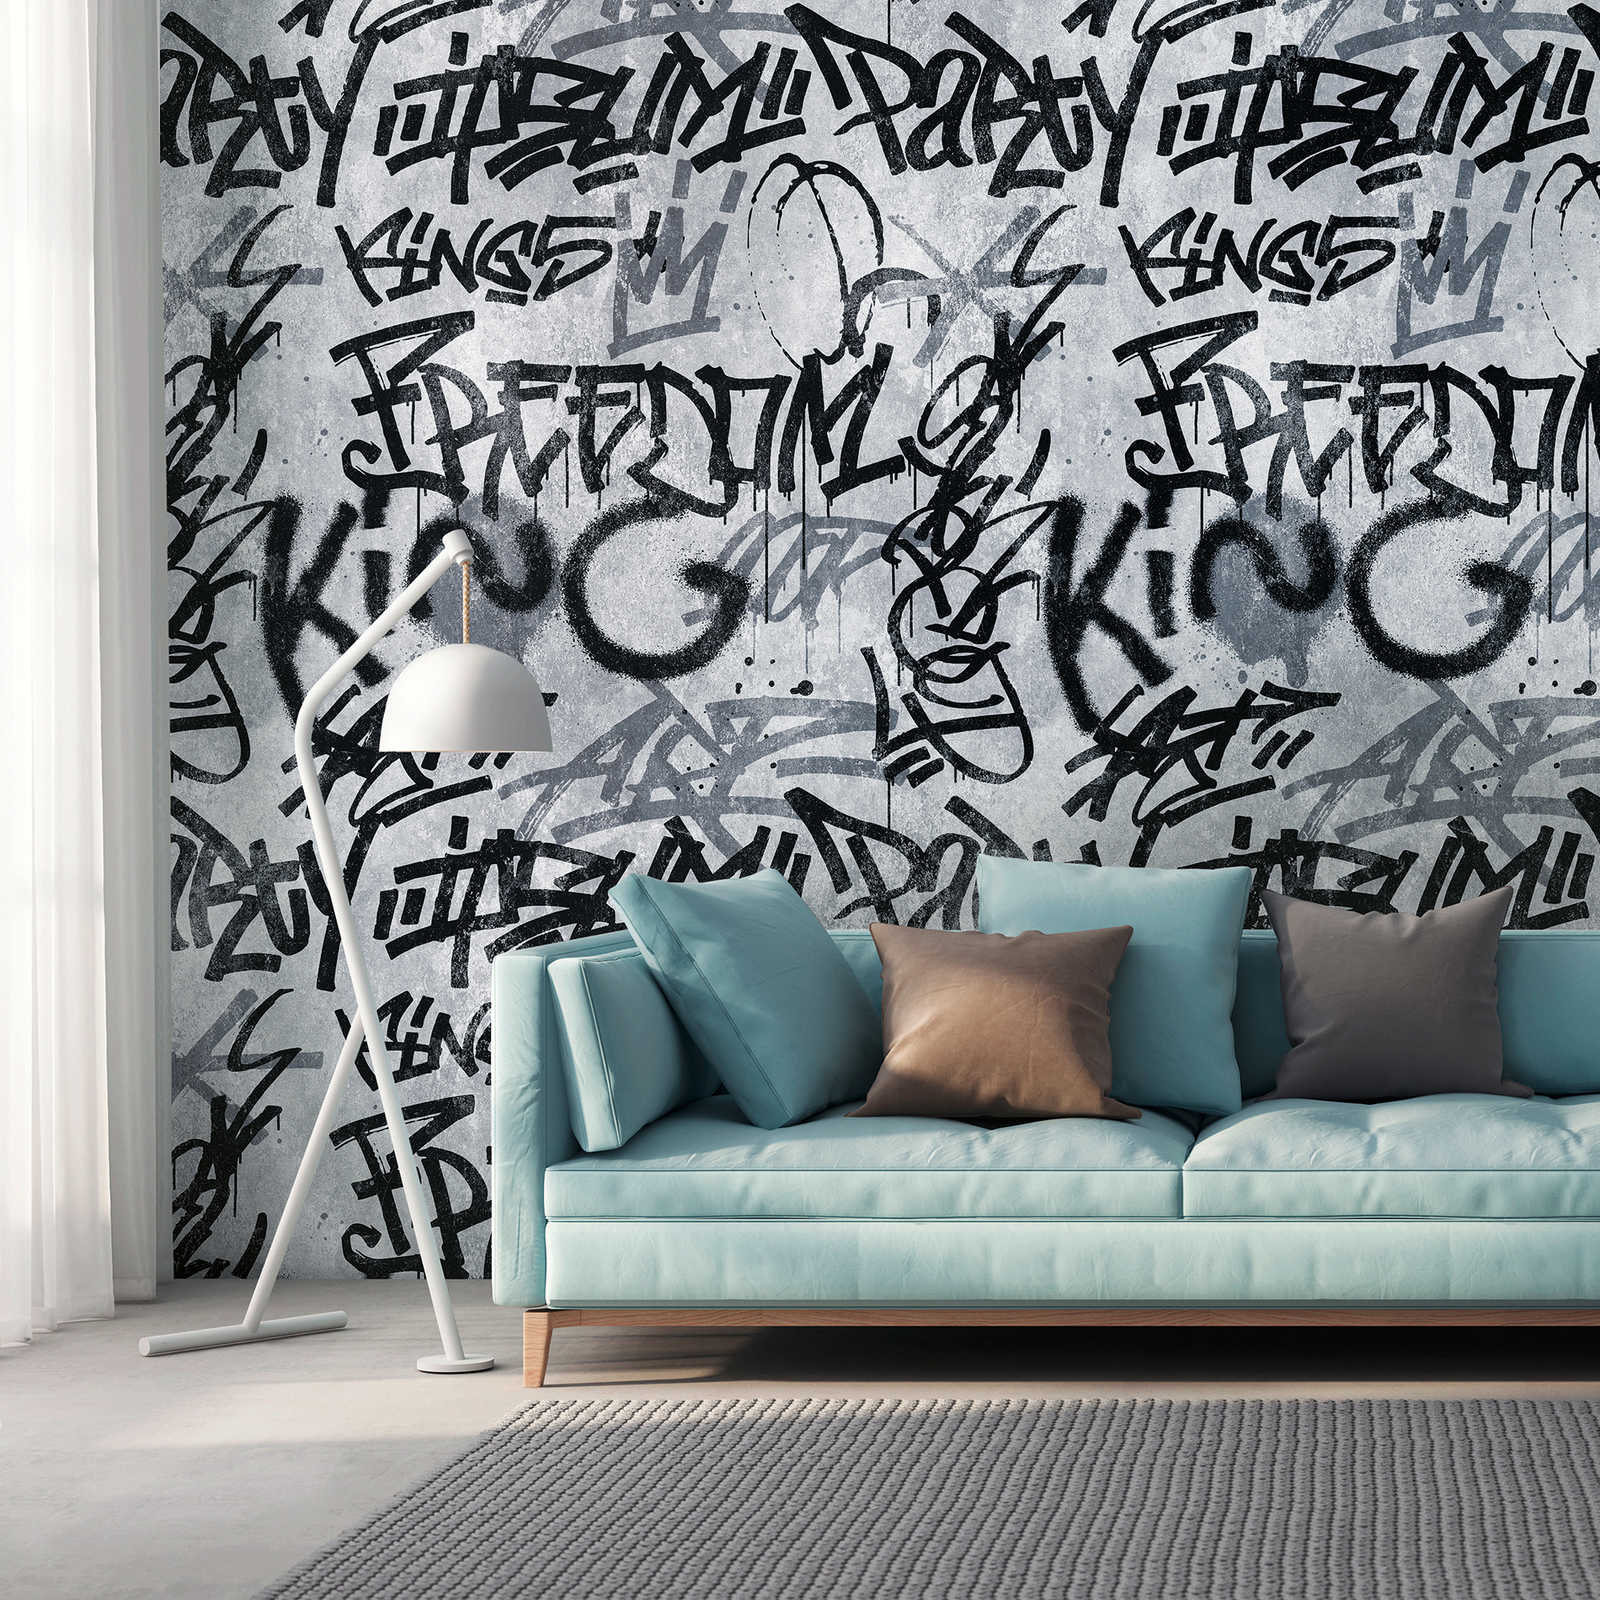         Tapeten-Neuheit | Motivtapete Graffiti & Beton Design, grau & urban
    